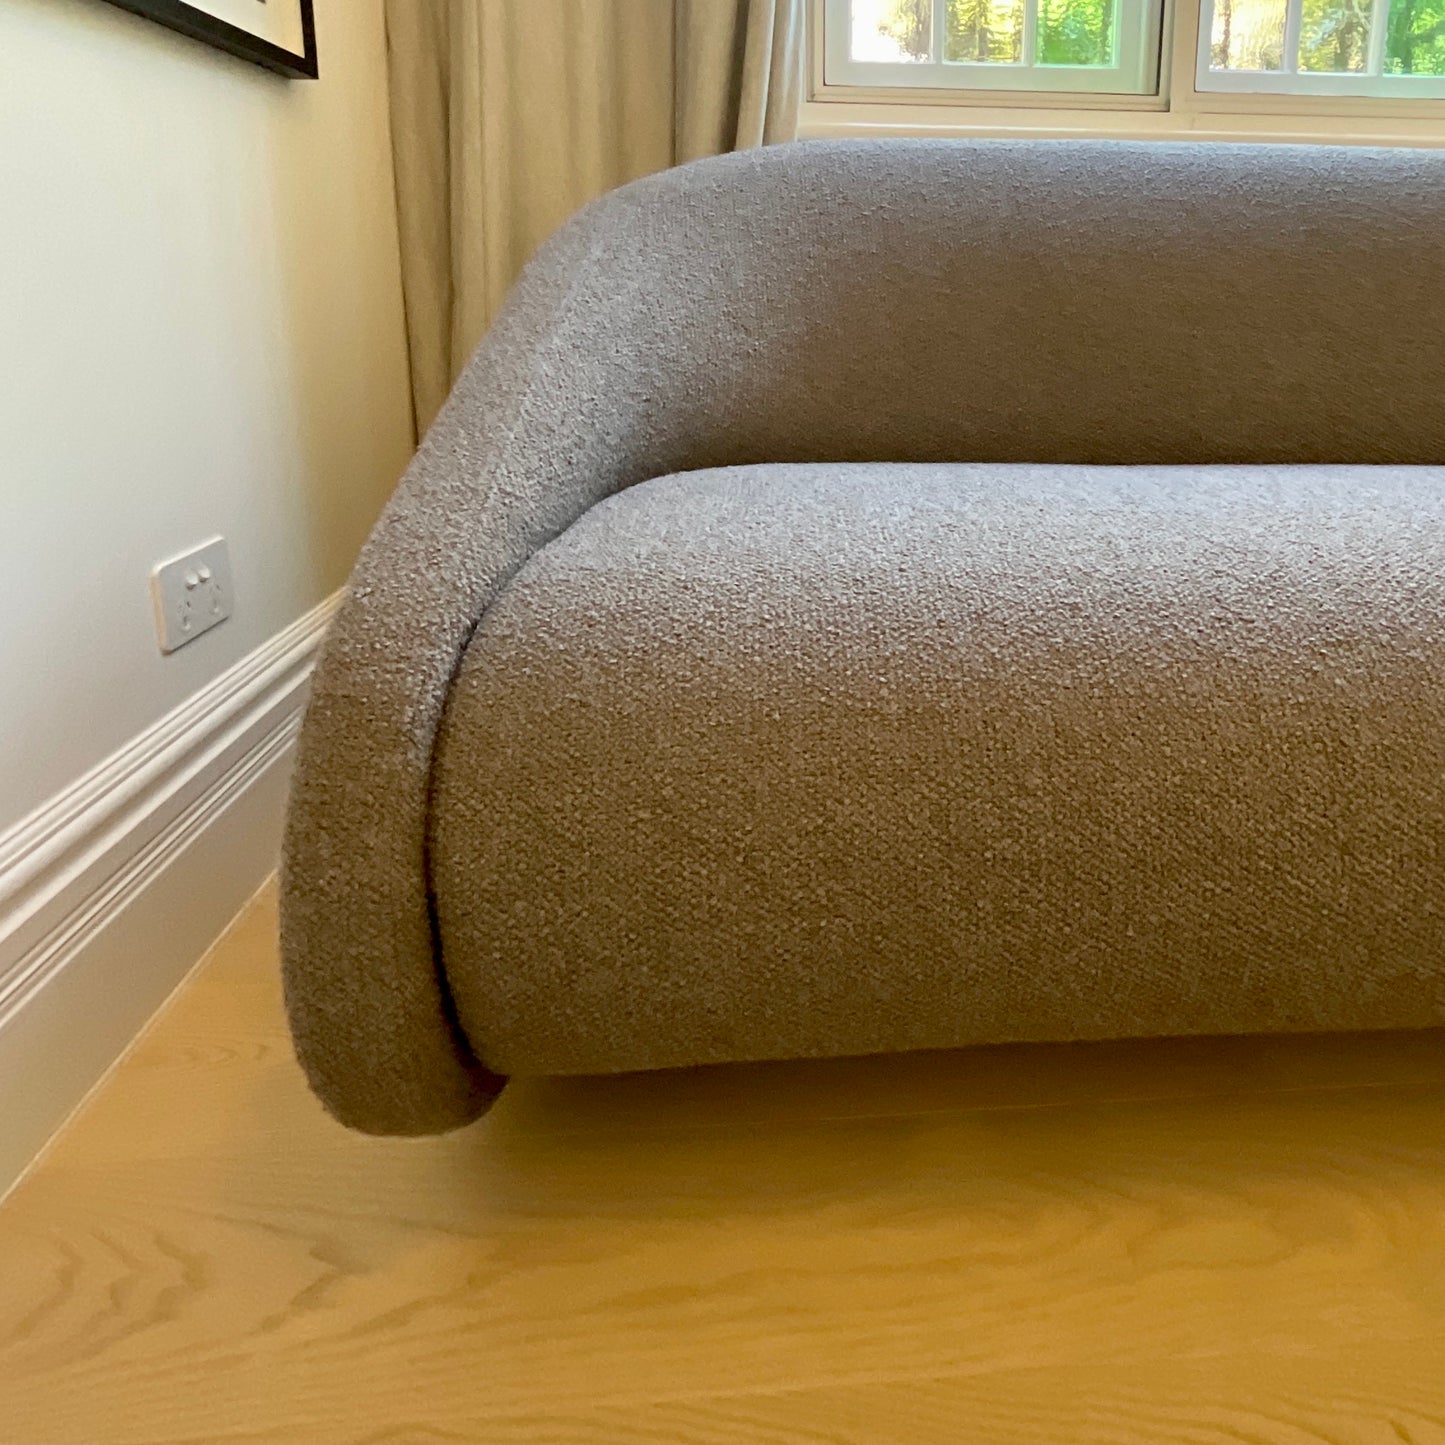 Up-Lift Sofa Bed by Neisako for Prostoria through Stylecraft